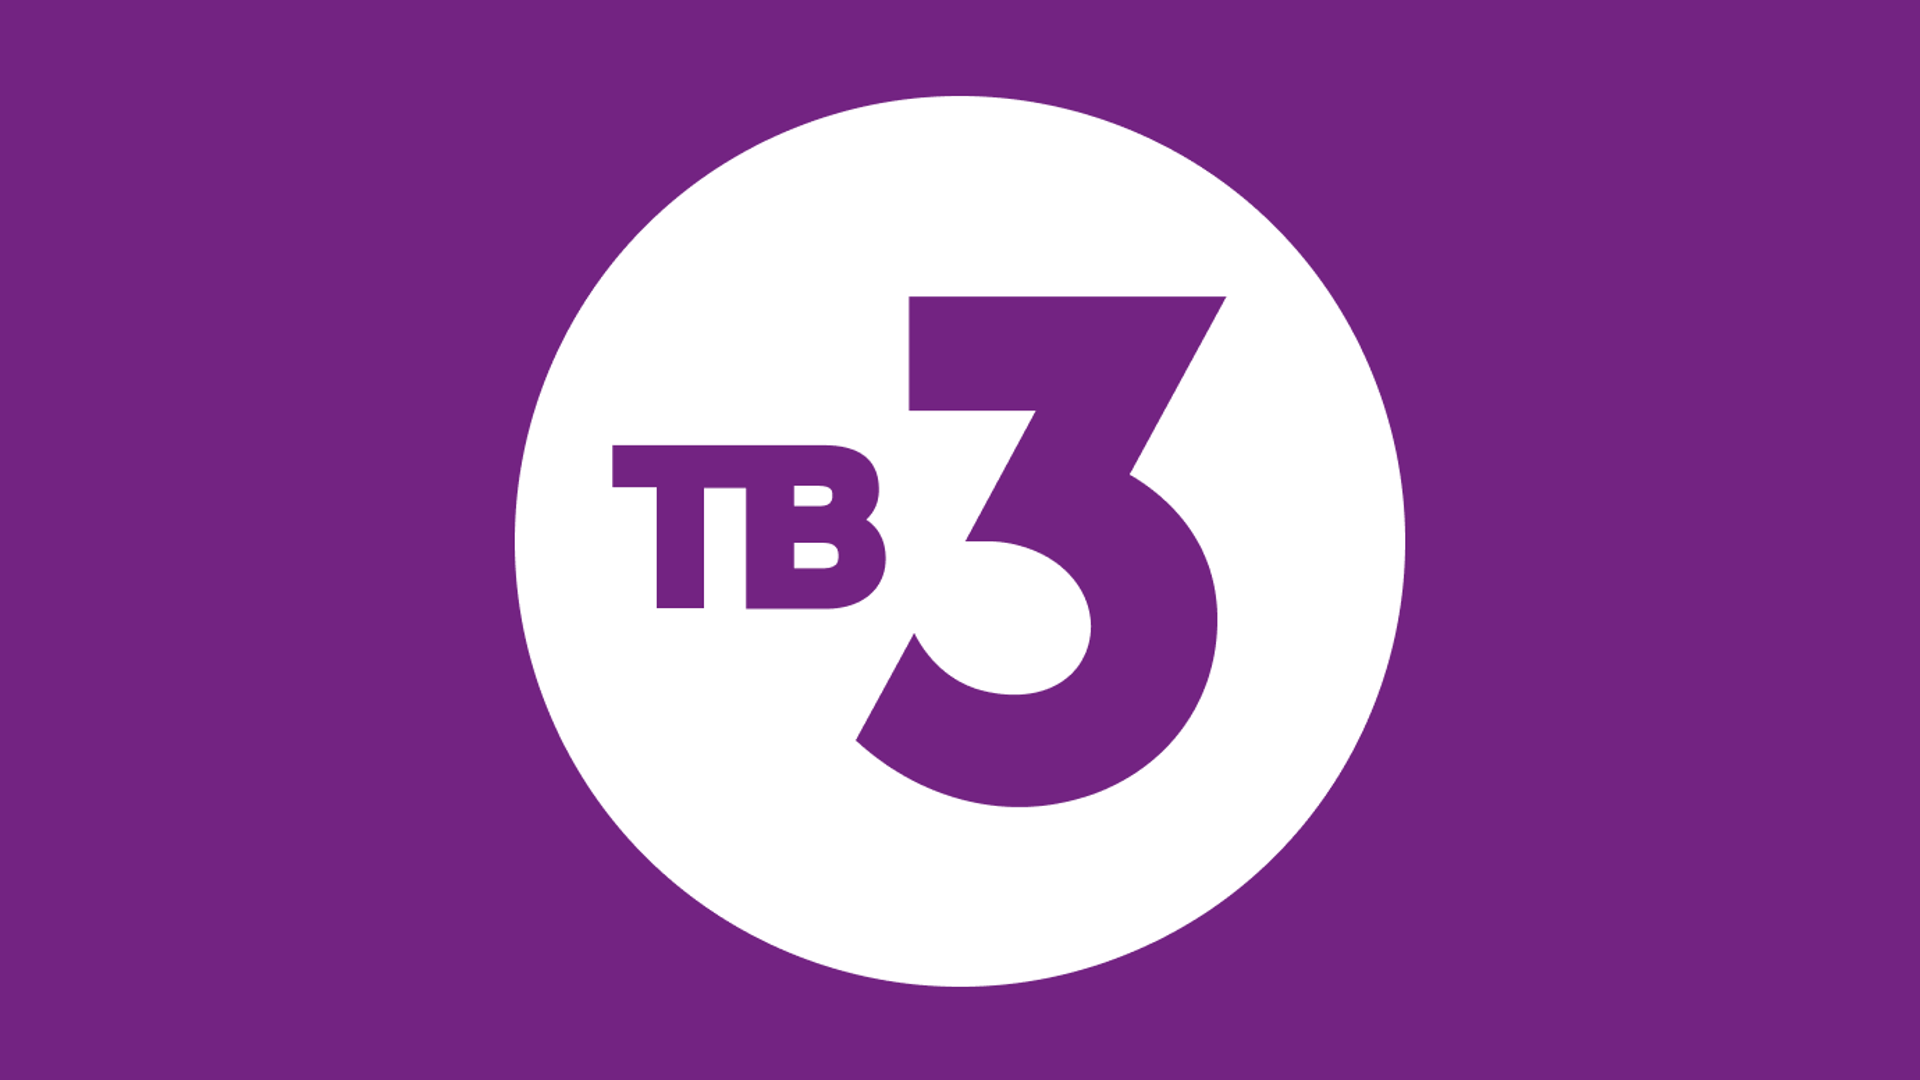 Эфир тв mail. Тв3 Телеканал логотип. Канал тв3. ТВ 3 эмблема. Эмблема канала тв3.